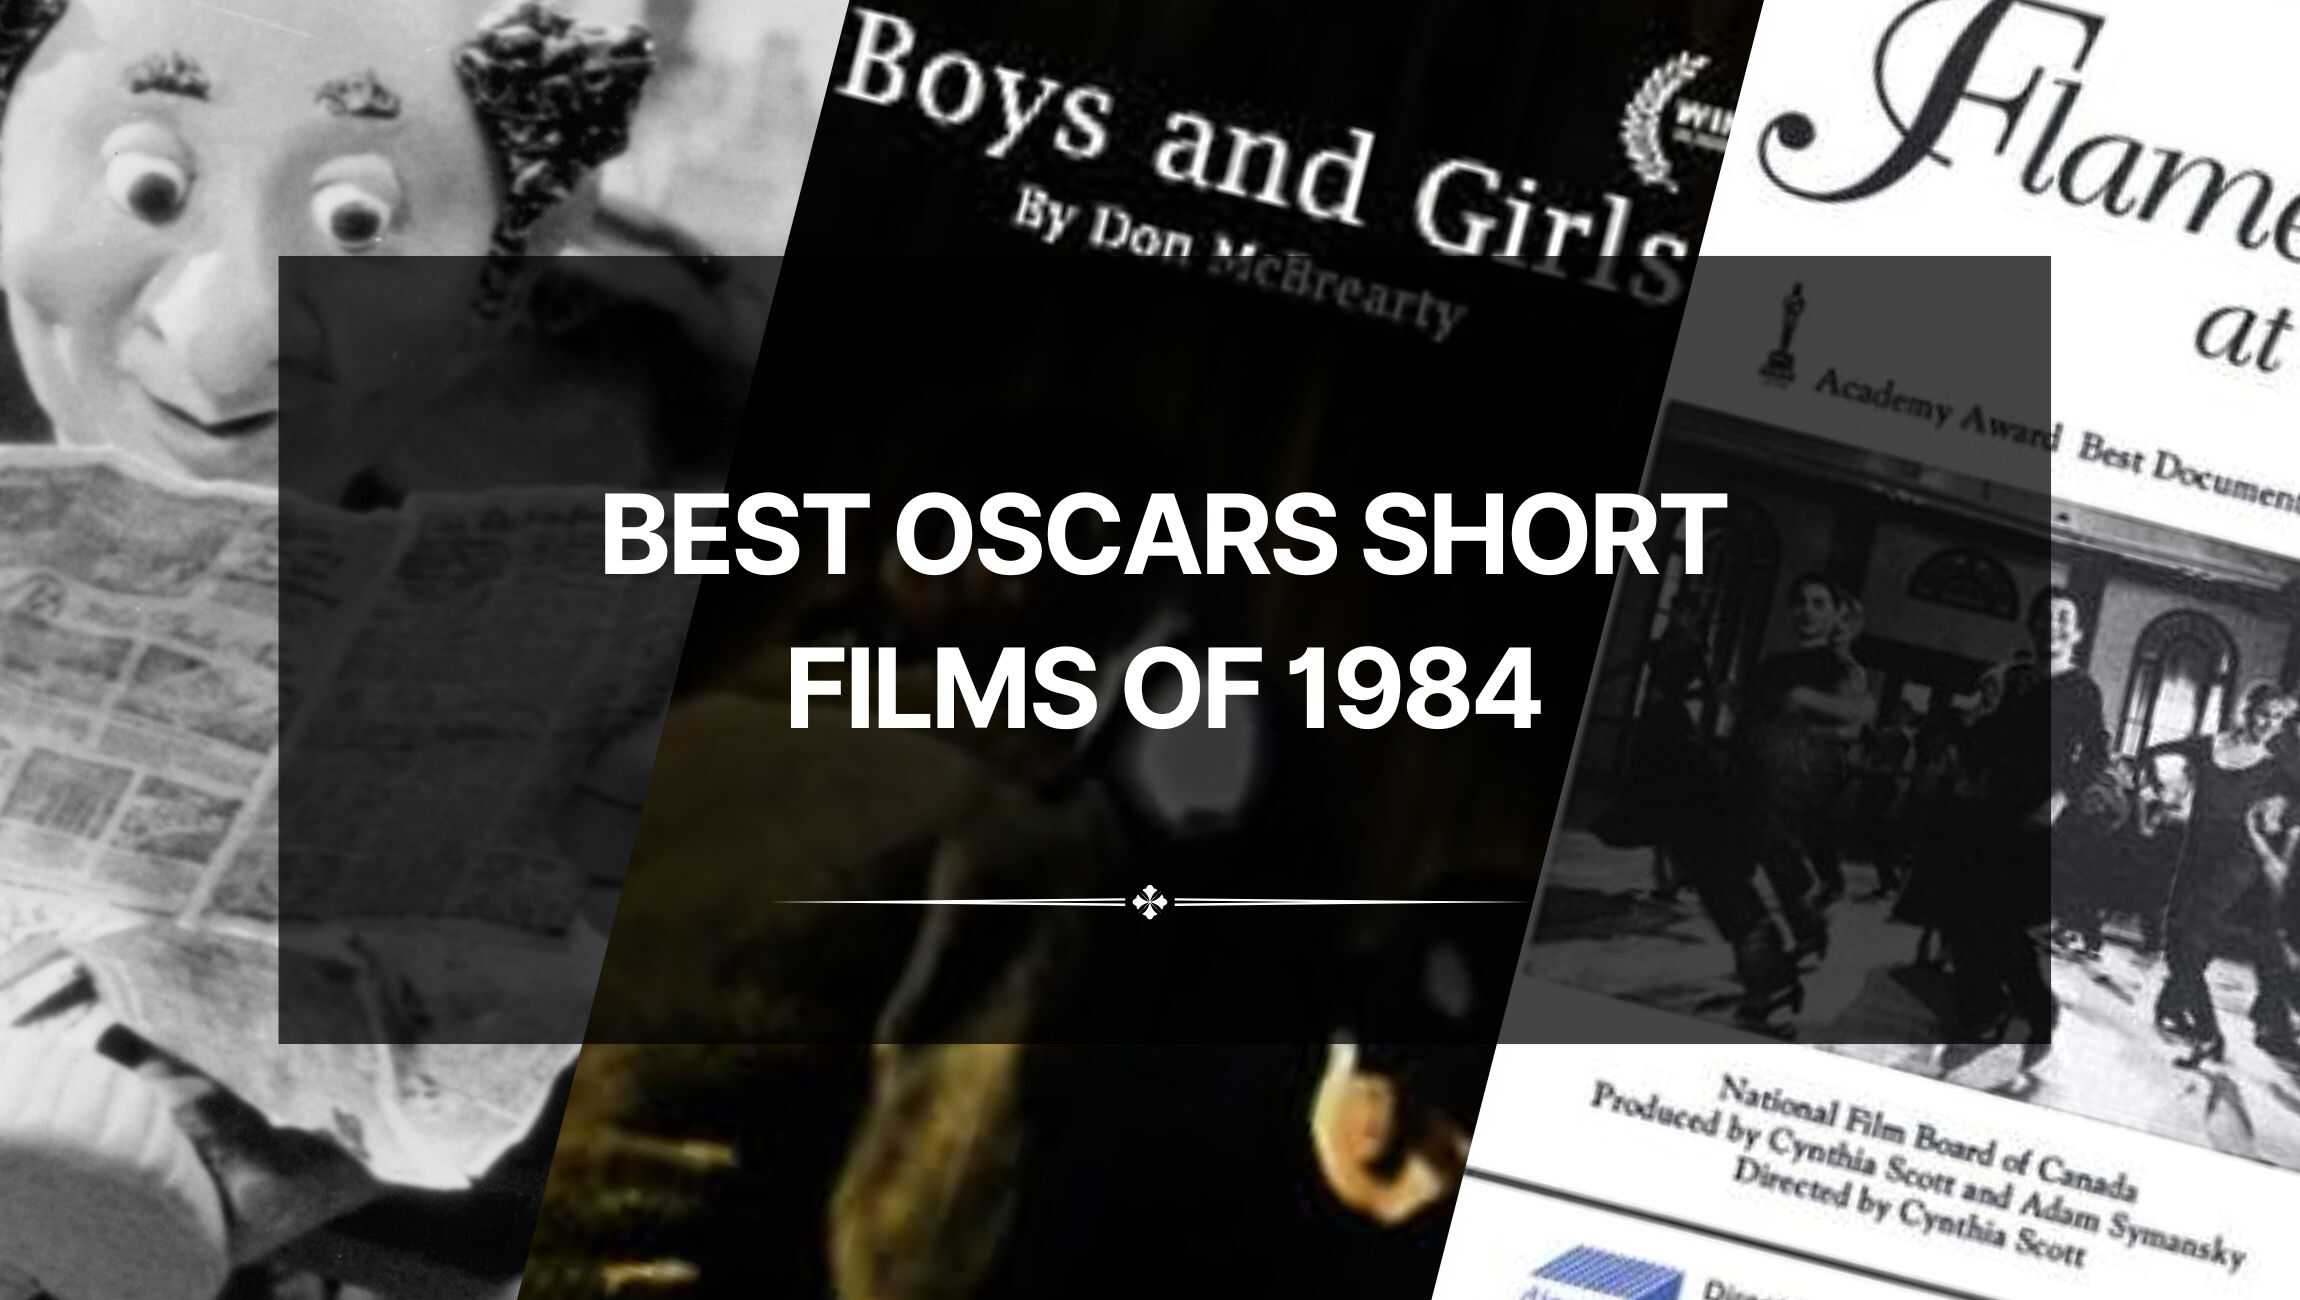 Best Oscars Short Films of 1984